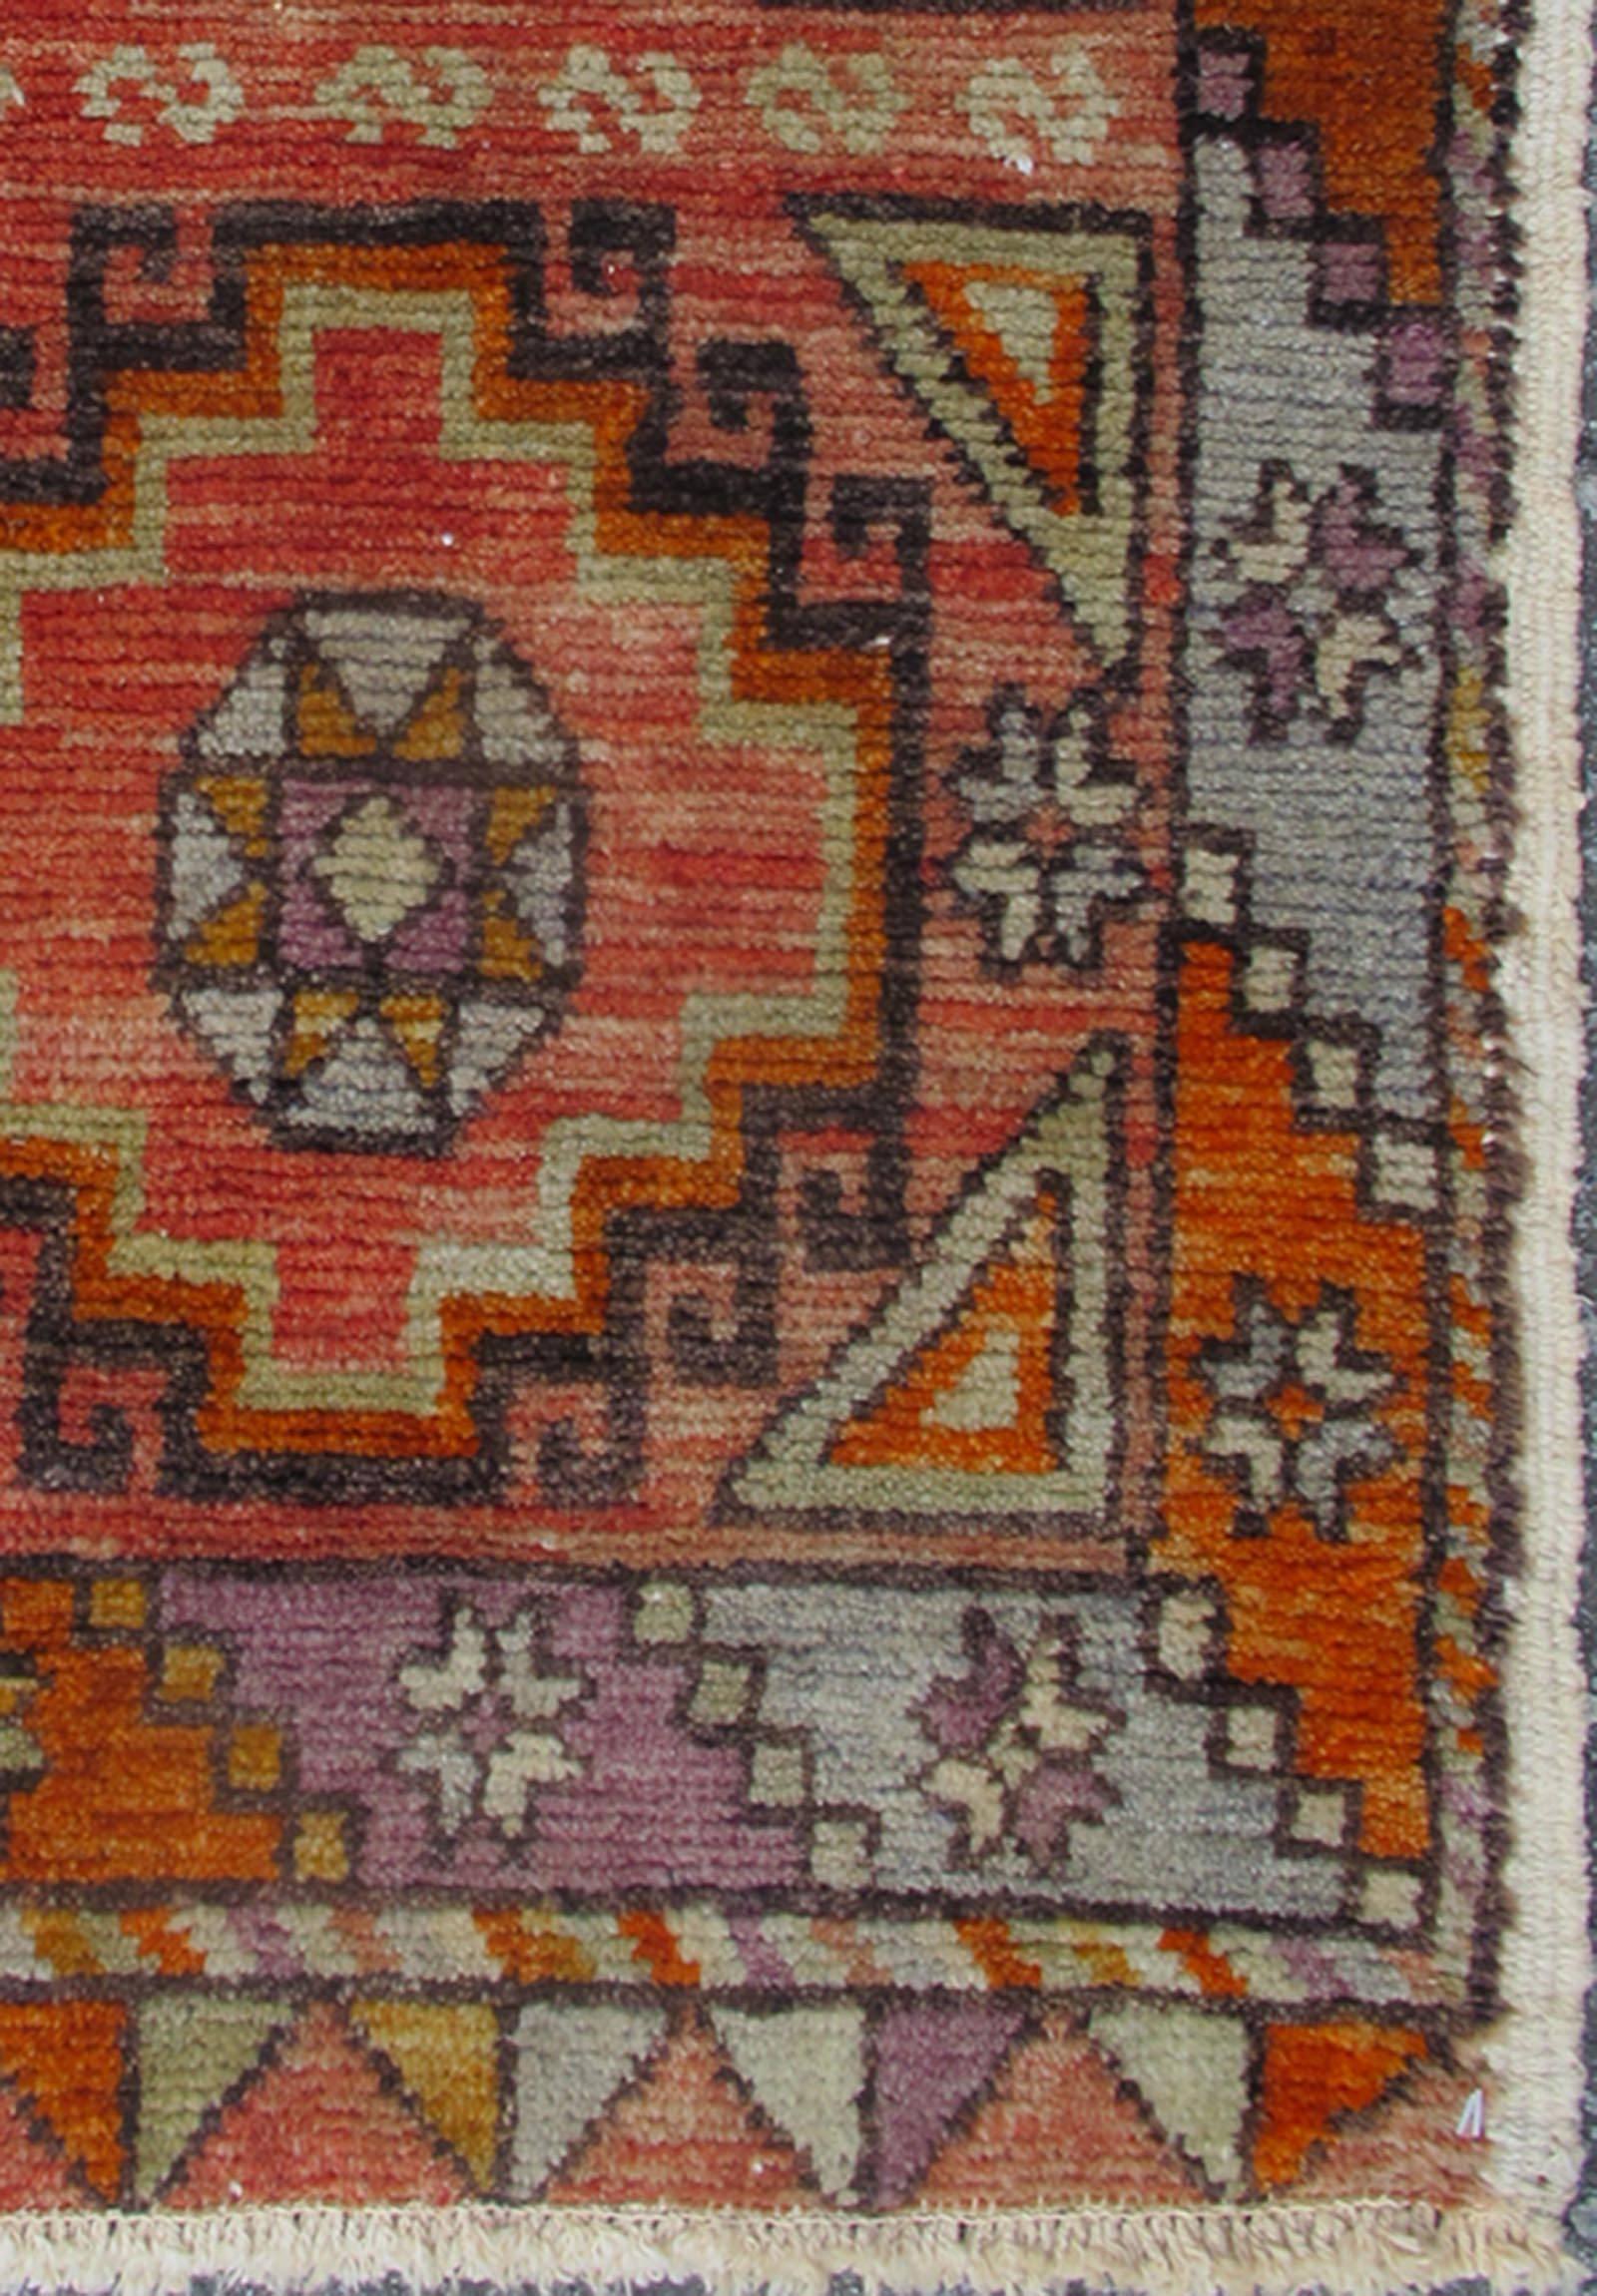 Vintage Oushak rug from Turkey with multicolored diamond geometric shapes, rug en-6371, country of origin / type: Turkey / Oushak, circa 1930

This vintage Turkish Oushak carpet, circa 1930 features three panes of geometric diamond designs. The